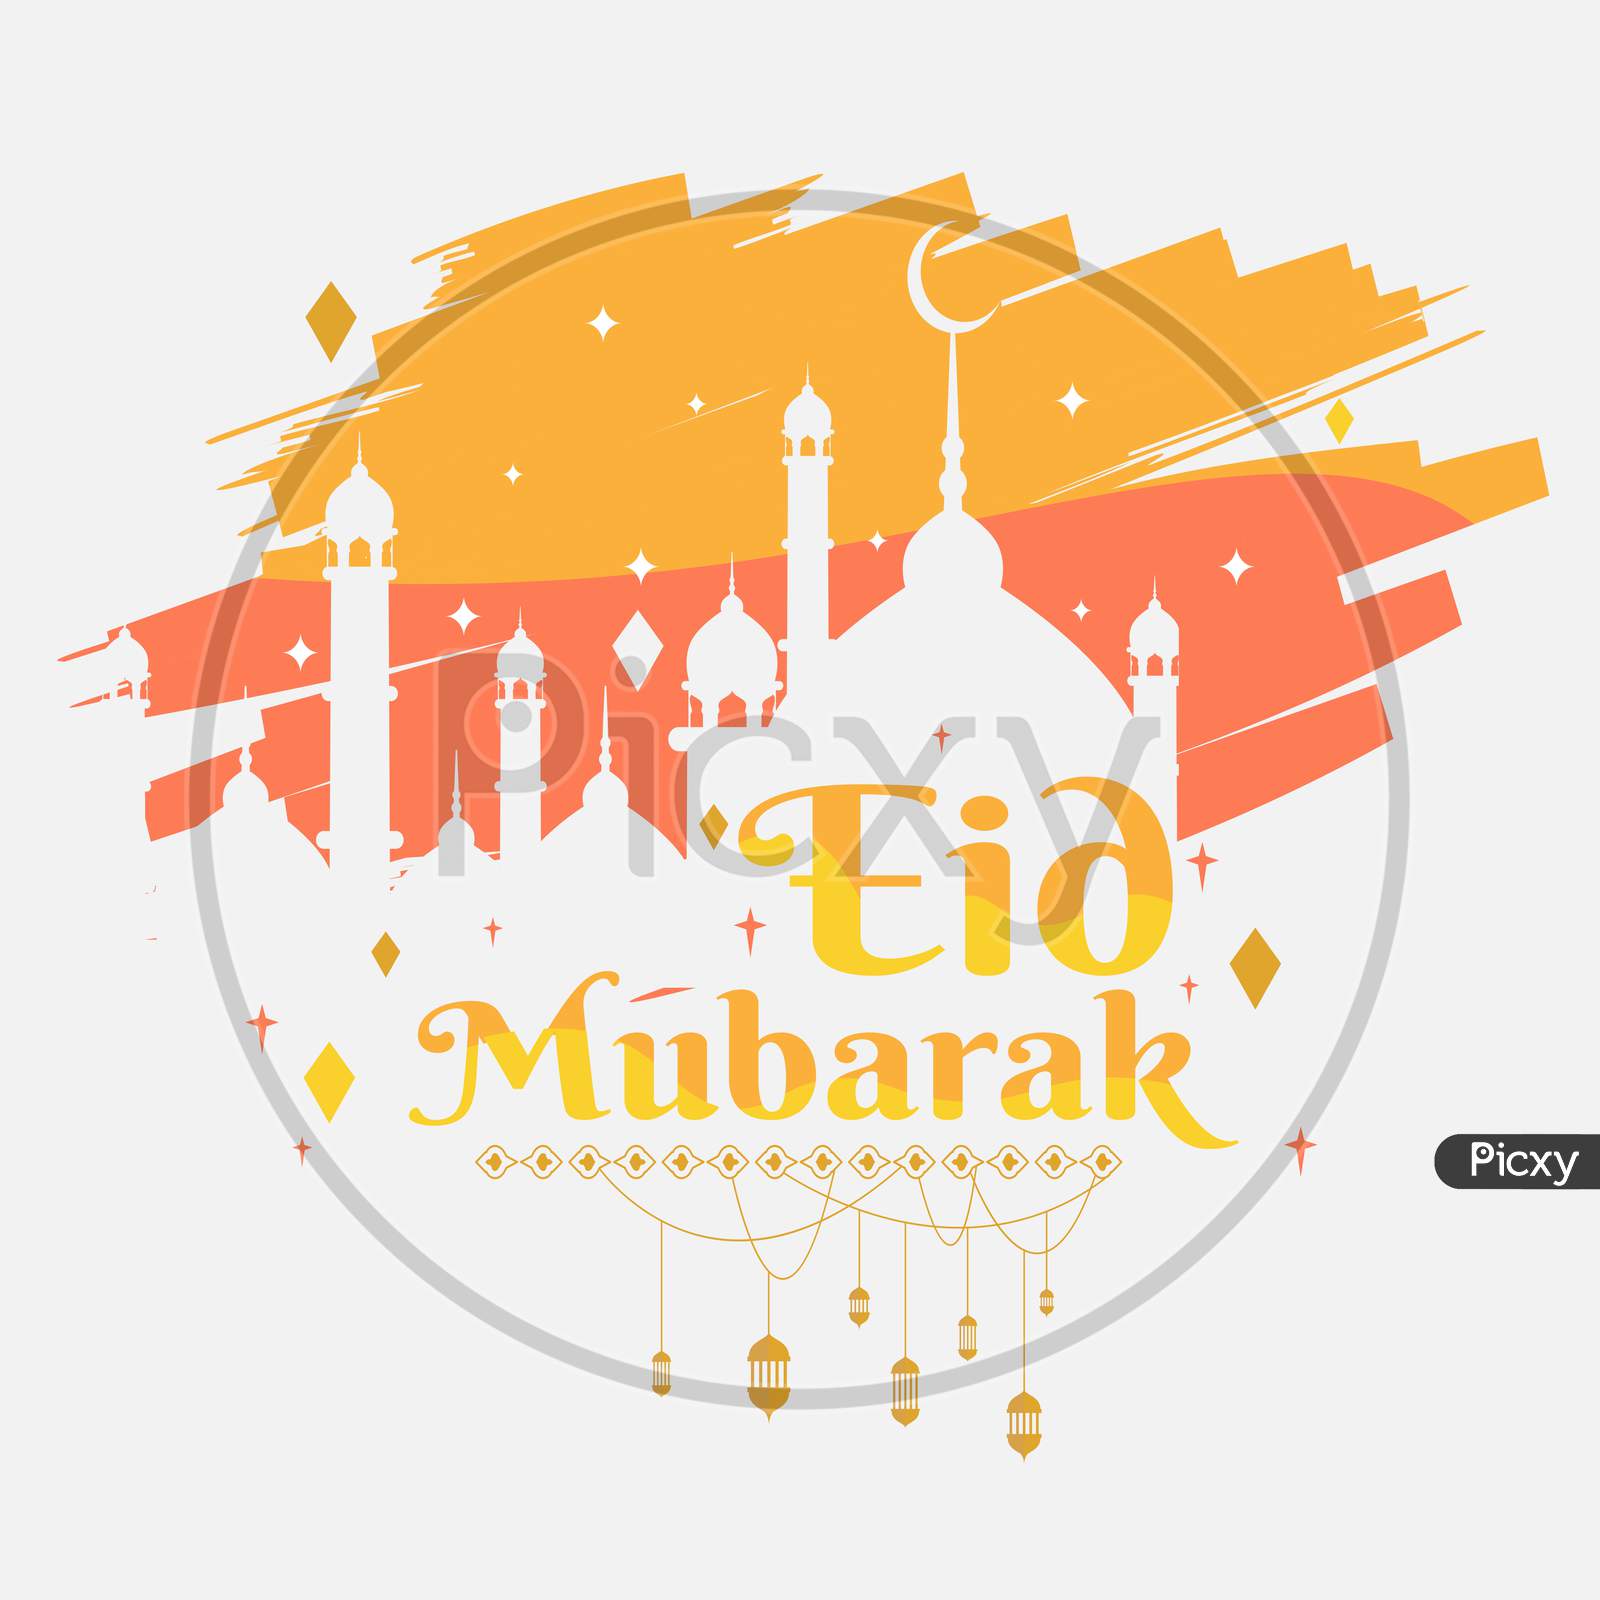 Eid Mubarak Greeting Poster, Background With Brush Strokes Illustration, Vector